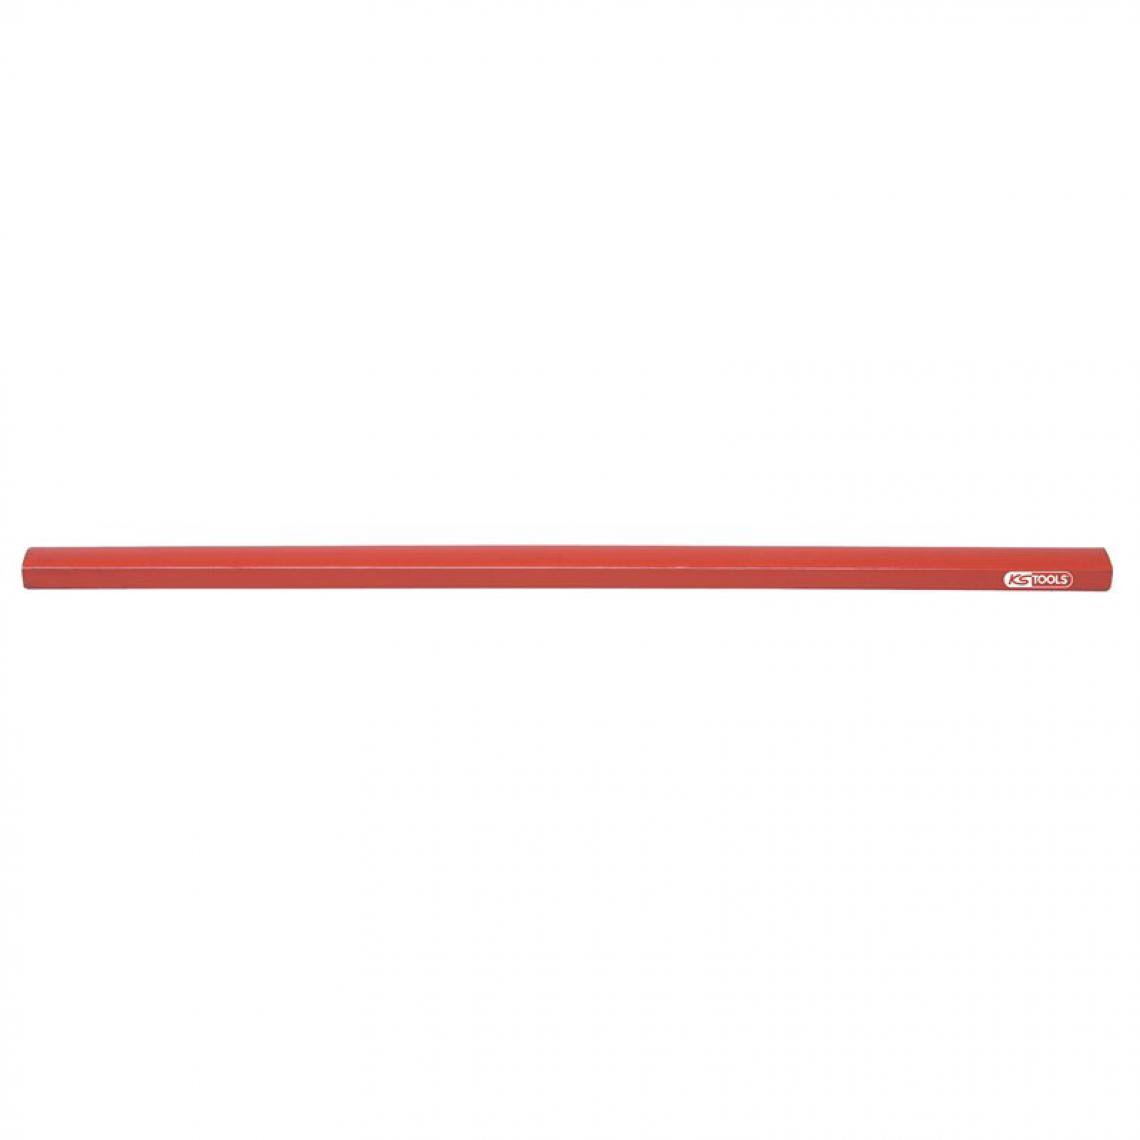 Ks Tools - Crayons de charpentier L, 250 mm - la boite de 12 crayons - Ciseaux de maçon